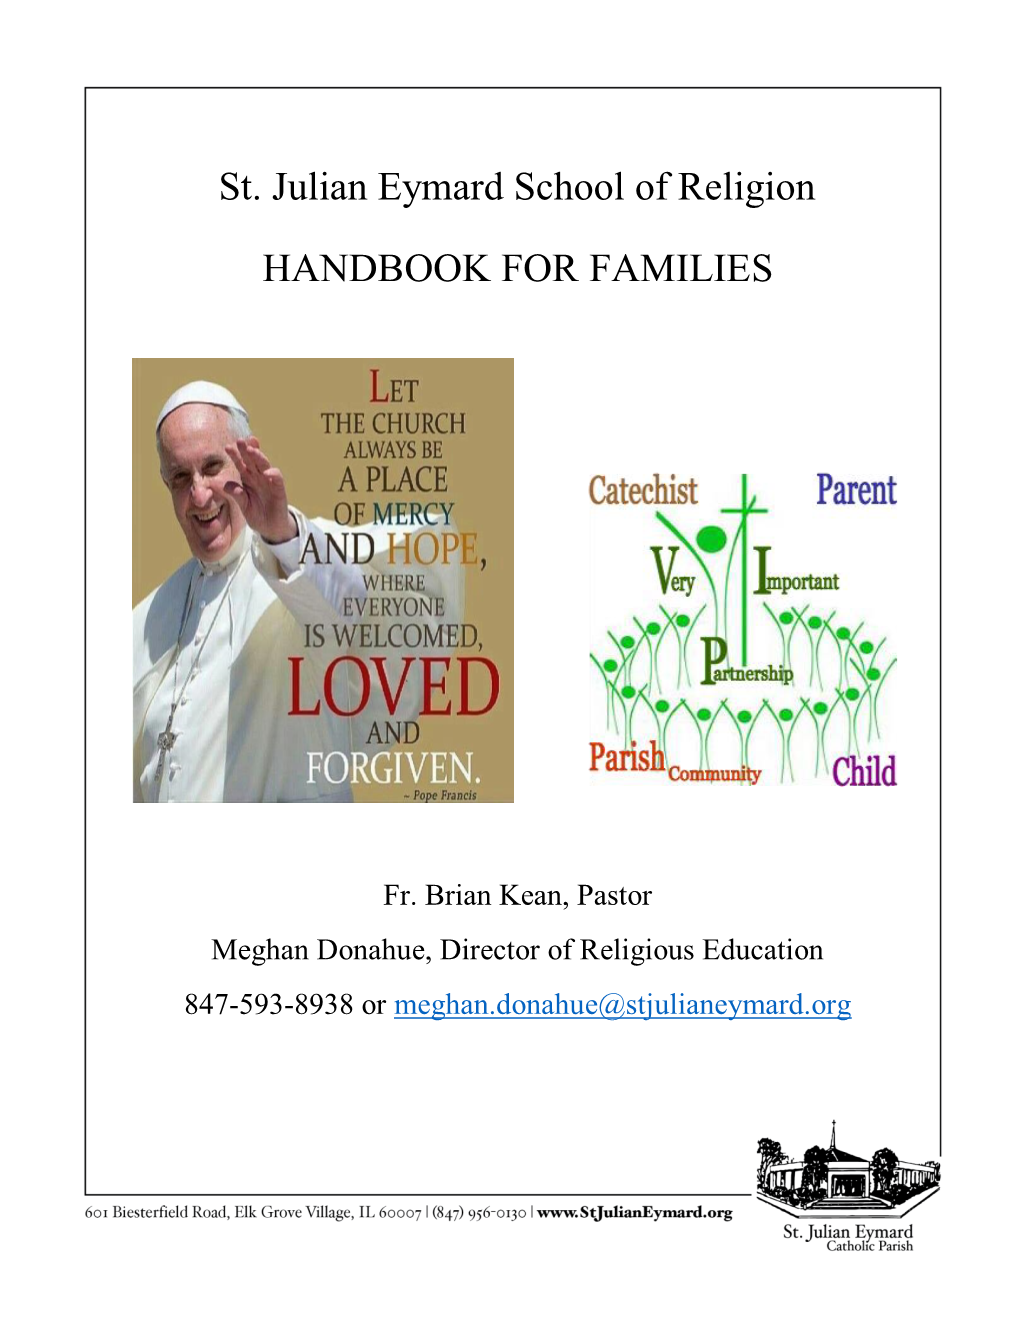 St. Julian Eymard School of Religion HANDBOOK for FAMILIES